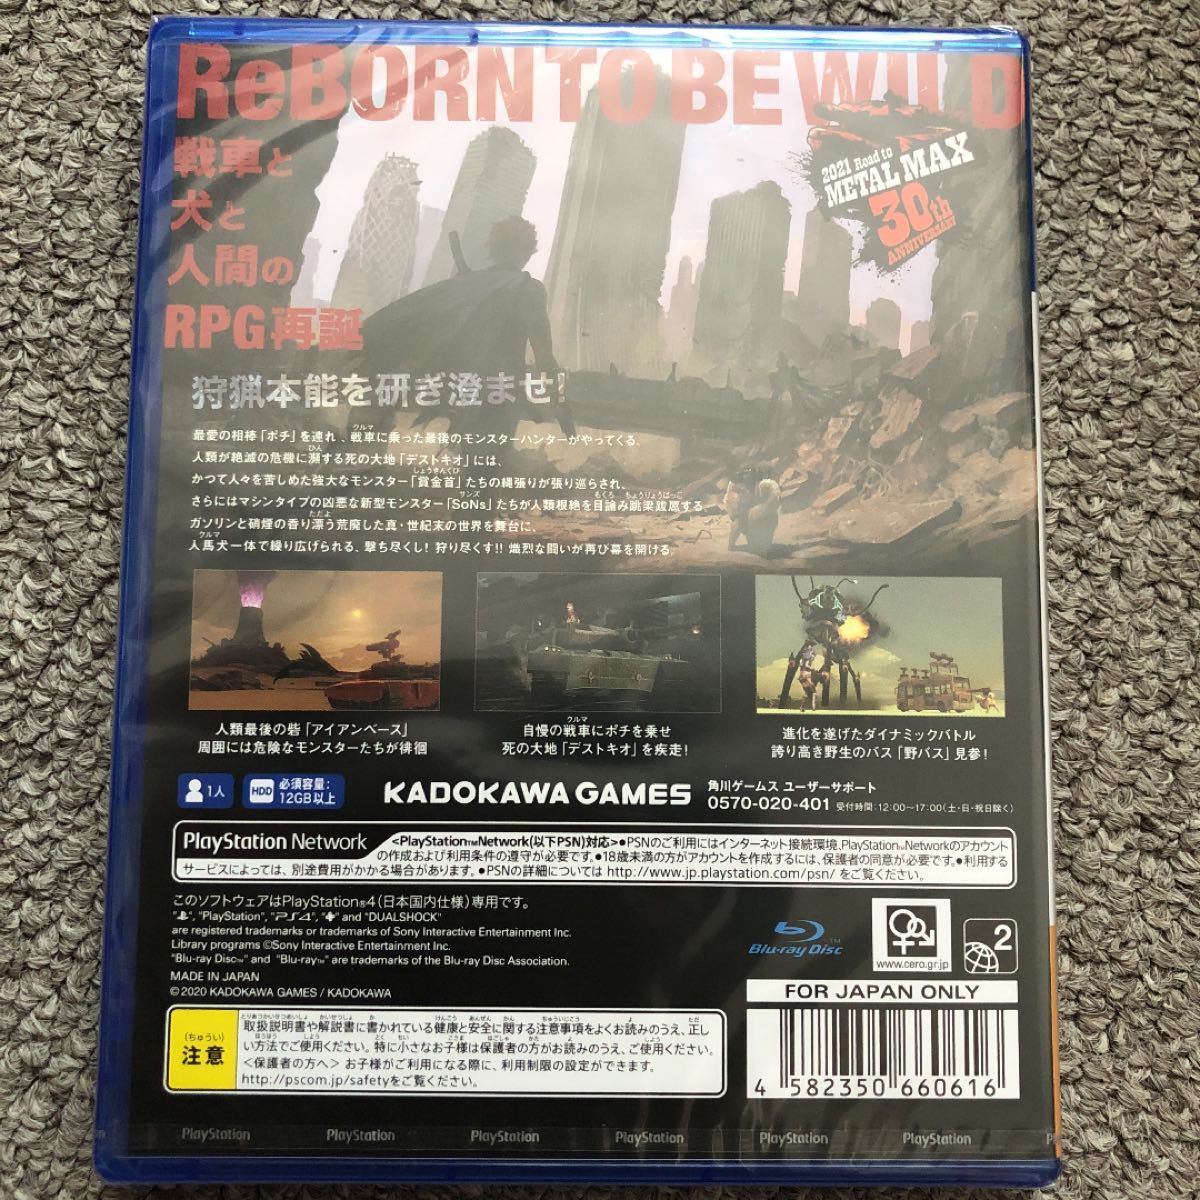 【PS4】 METAL MAX Xeno Reborn [通常版] 初回特典付き　新品未開封　メタルマックス　ゼノ　リボーン